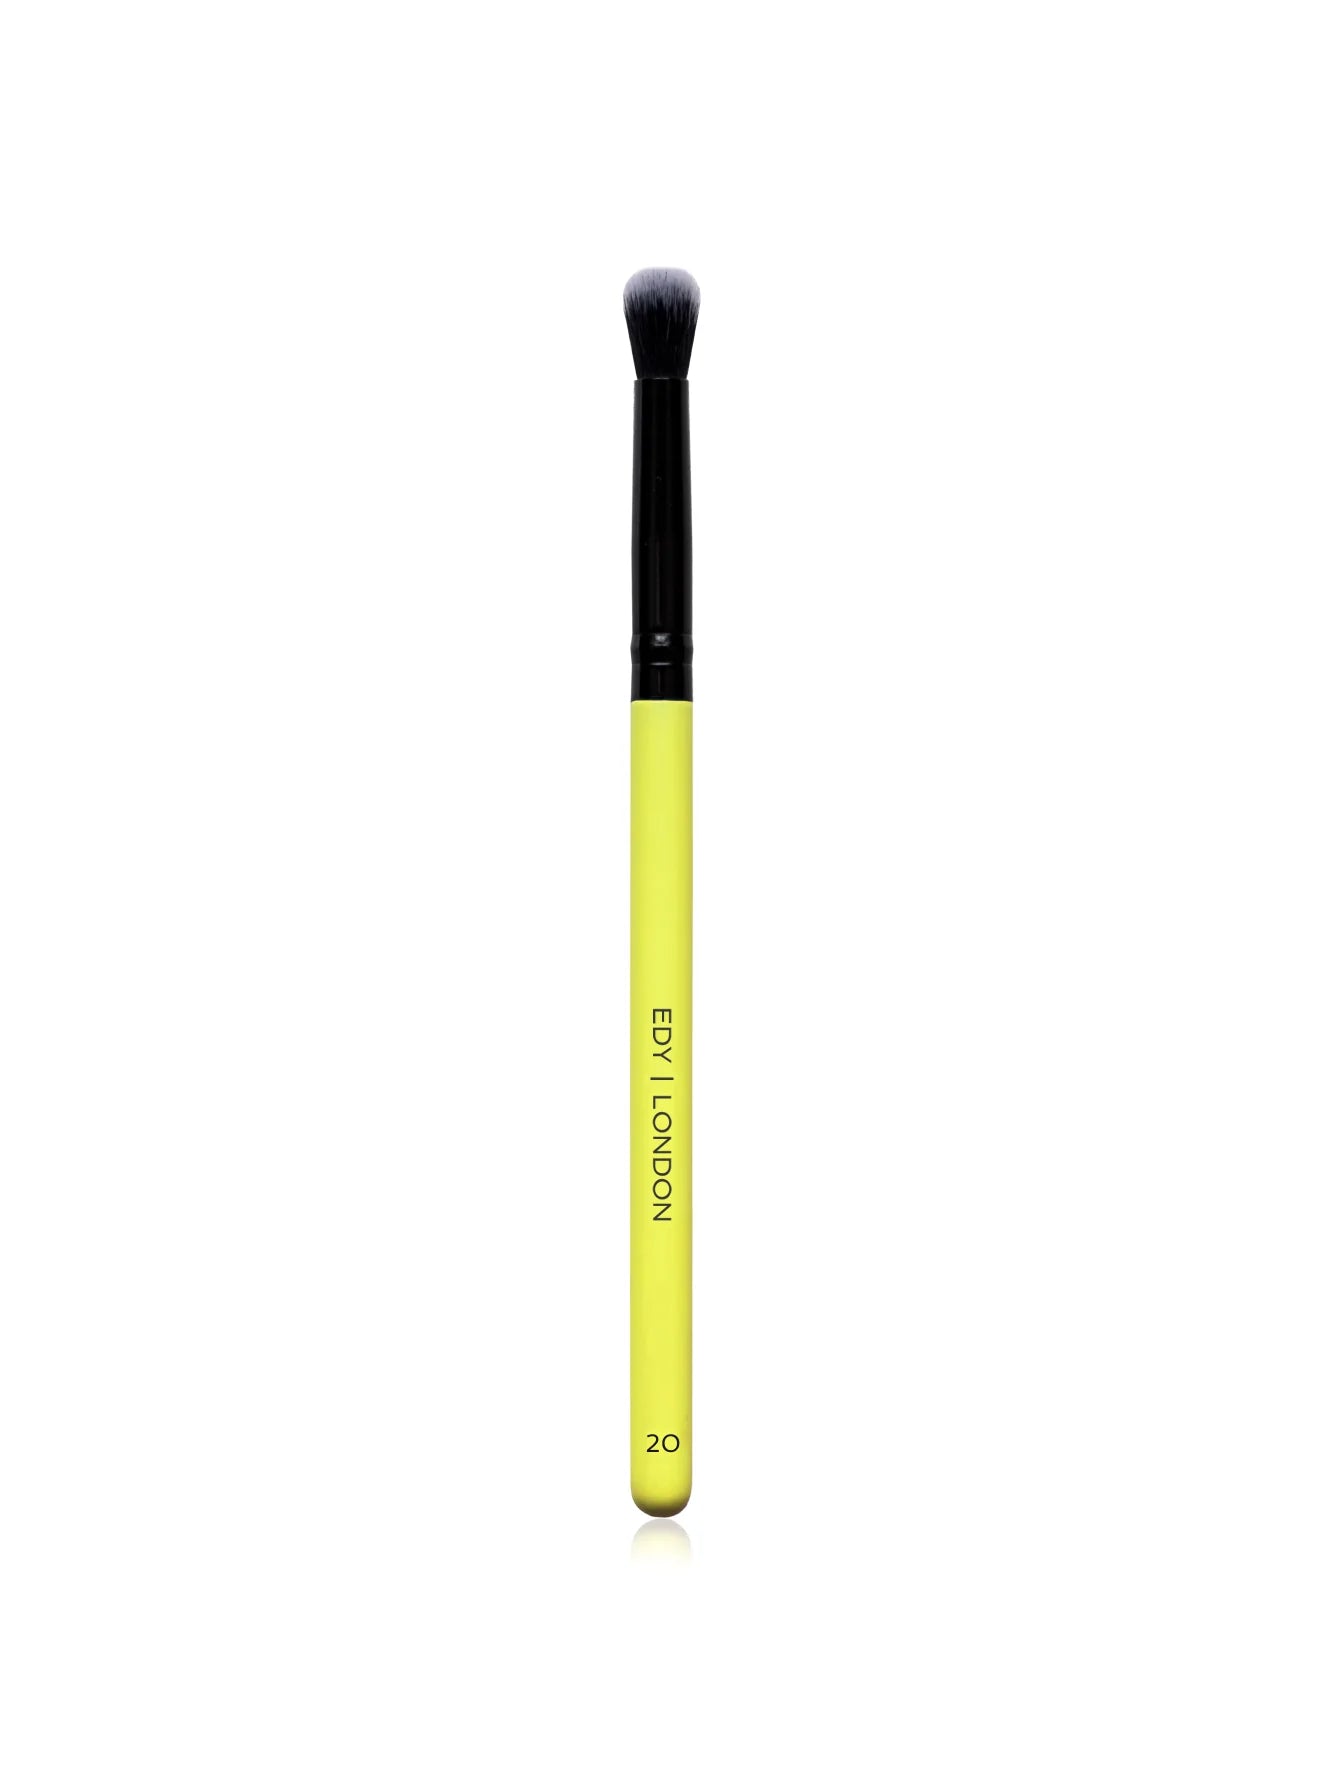 Soft Blender / Concealer Brush 20 Make-up Brush EDY LONDON Lemon   - EDY LONDON PRODUCTS UK - The Best Makeup Brushes - shop.edy.london